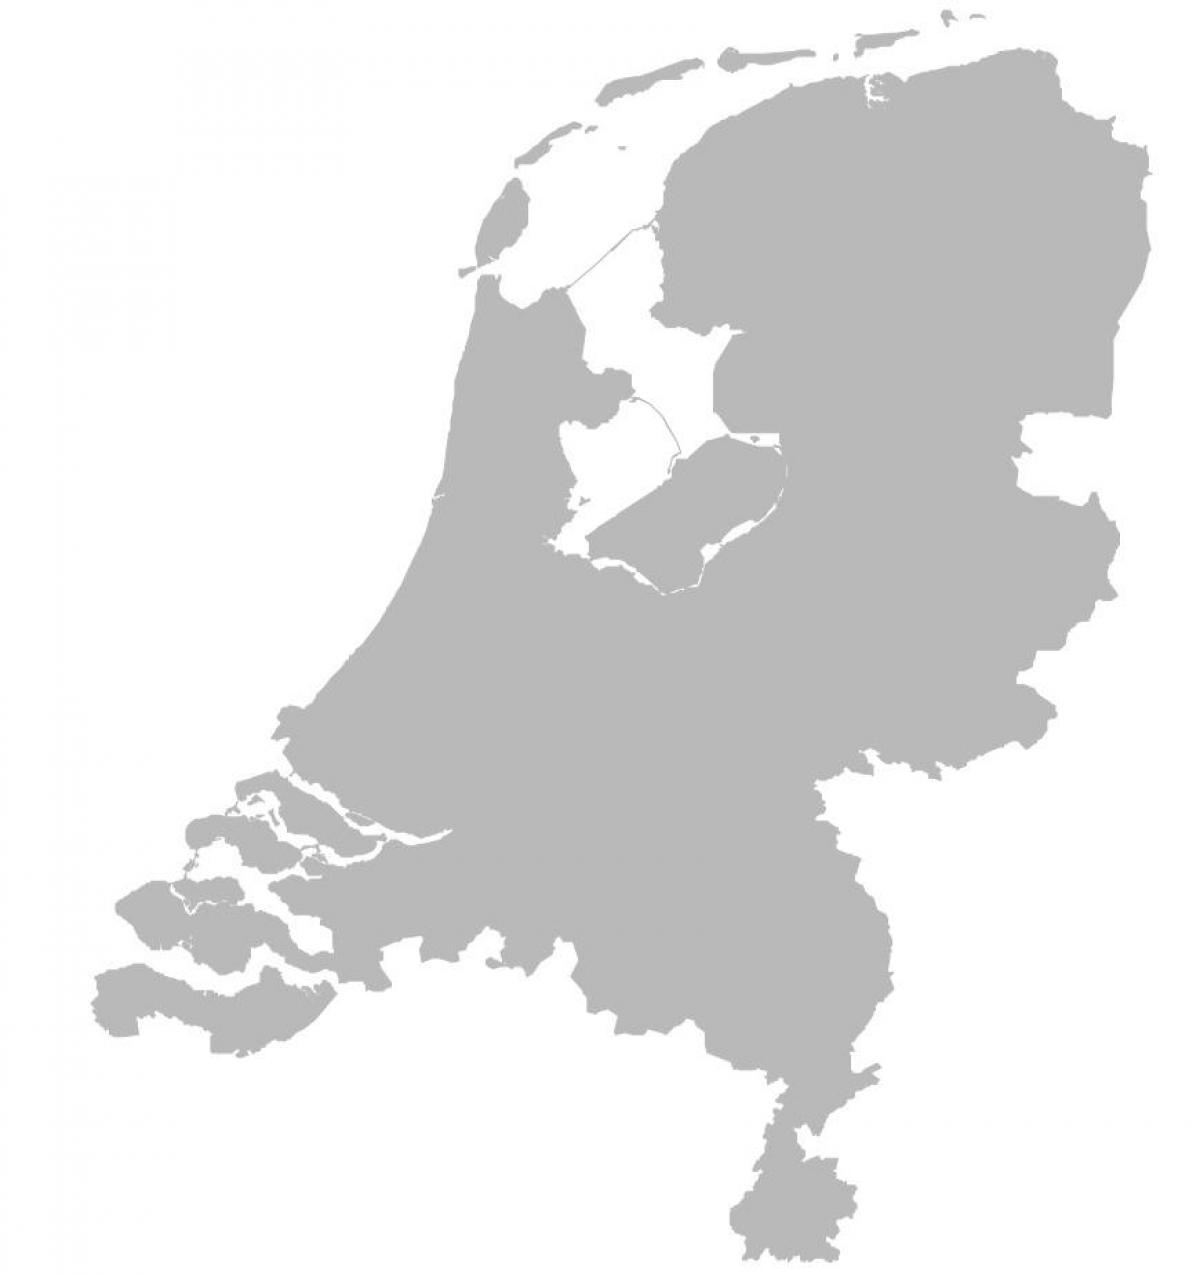 Netherlands vector map